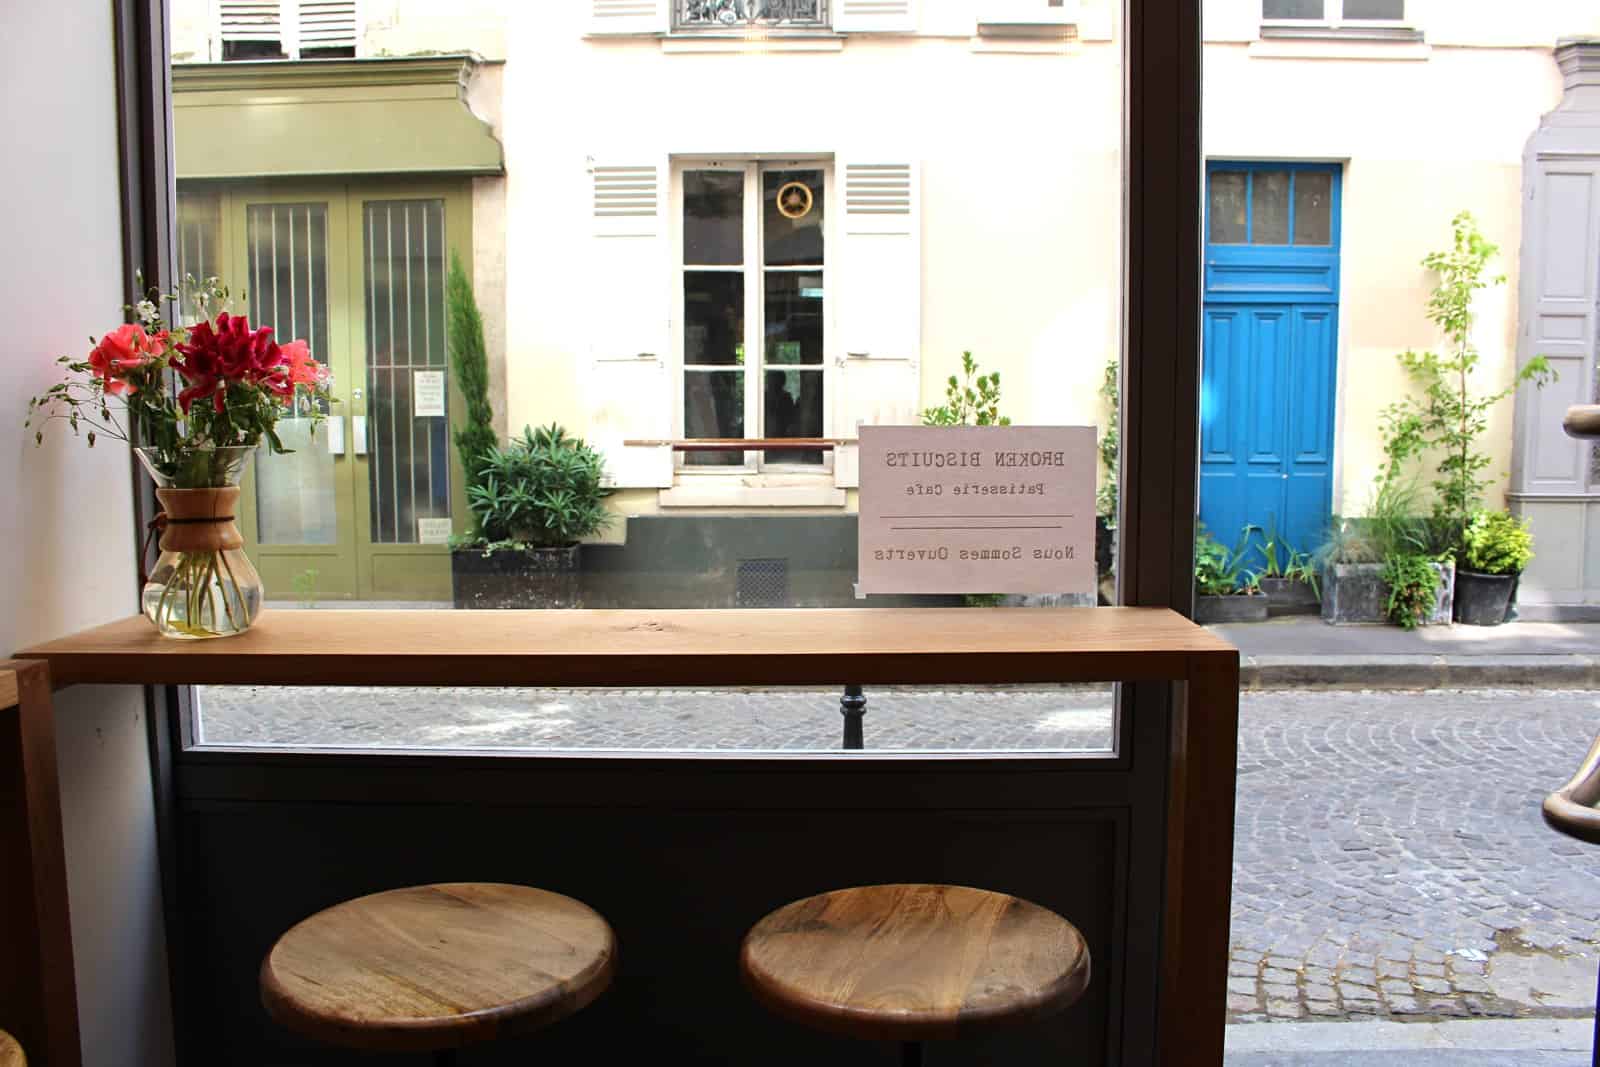 Three Insider Coffee Addresses for Your Paris Caffeine Fix